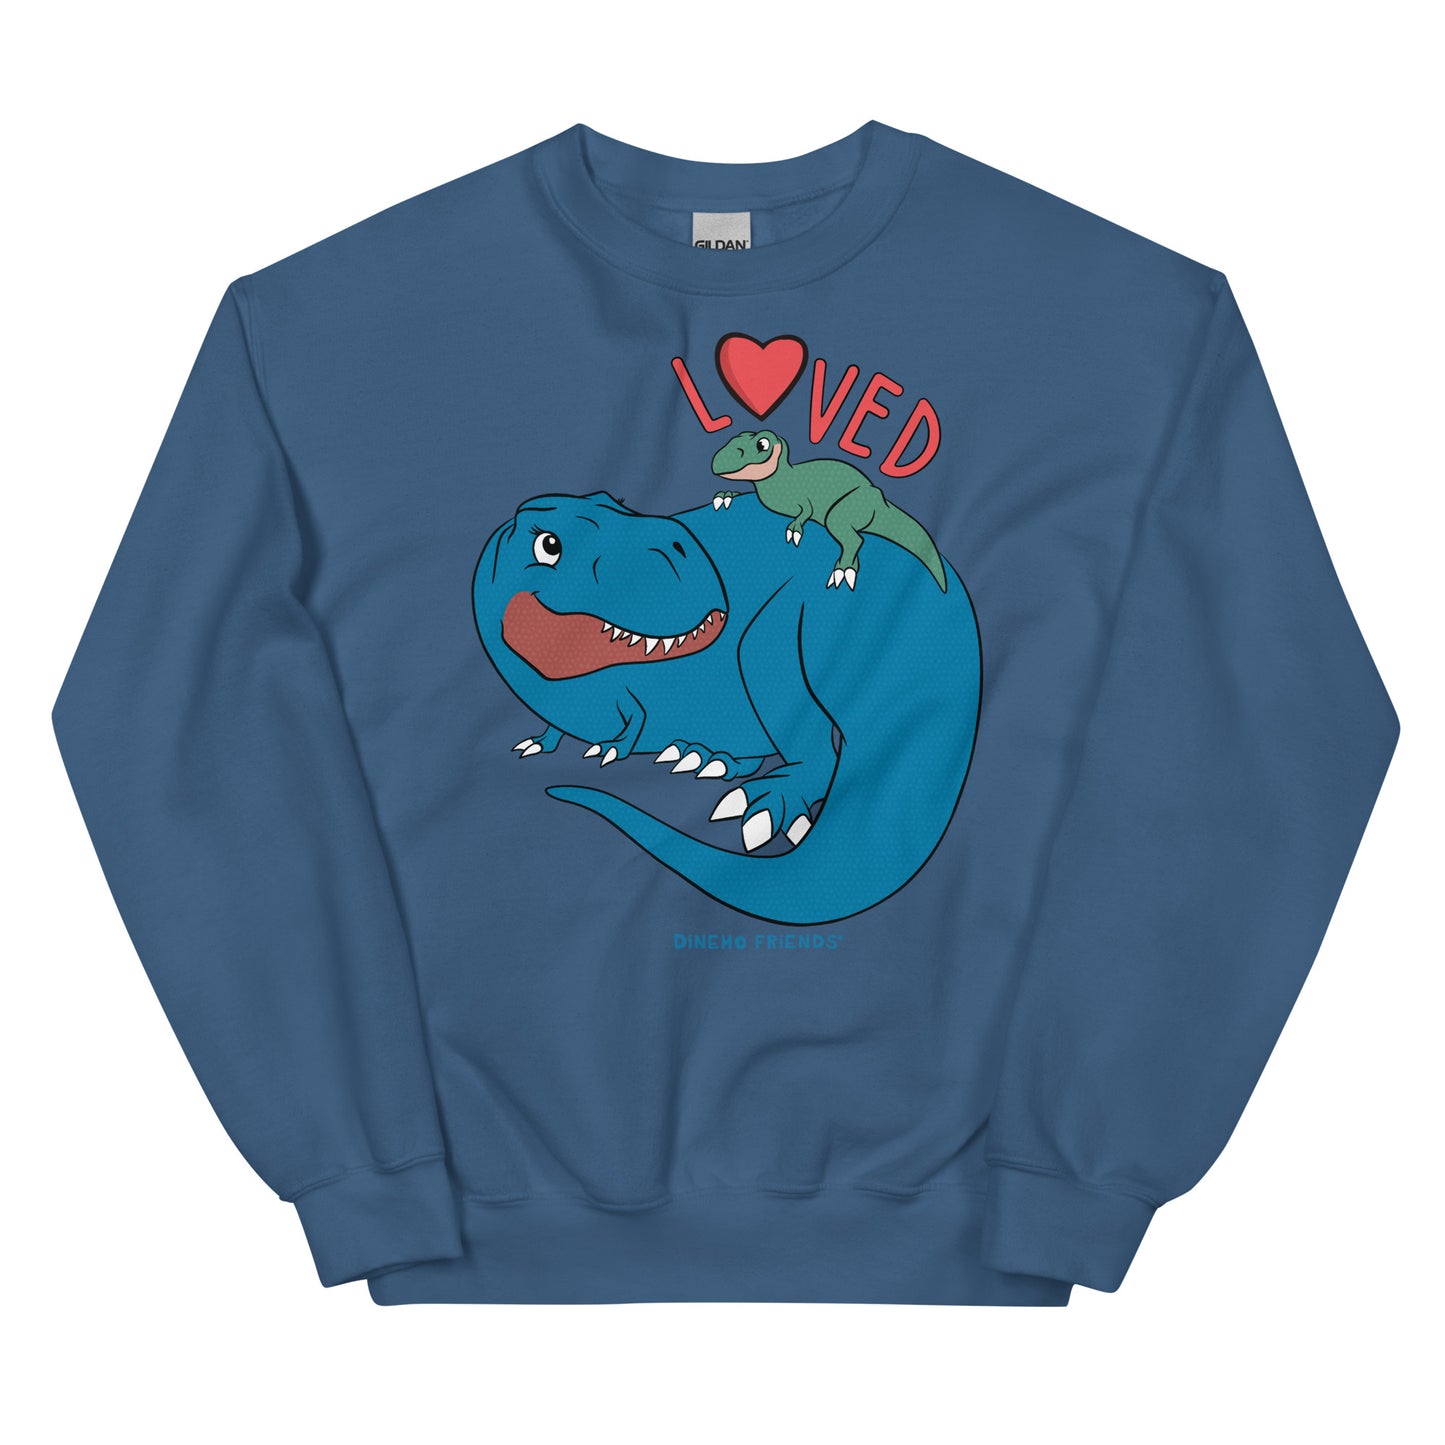 Loved Dino Sweatshirt